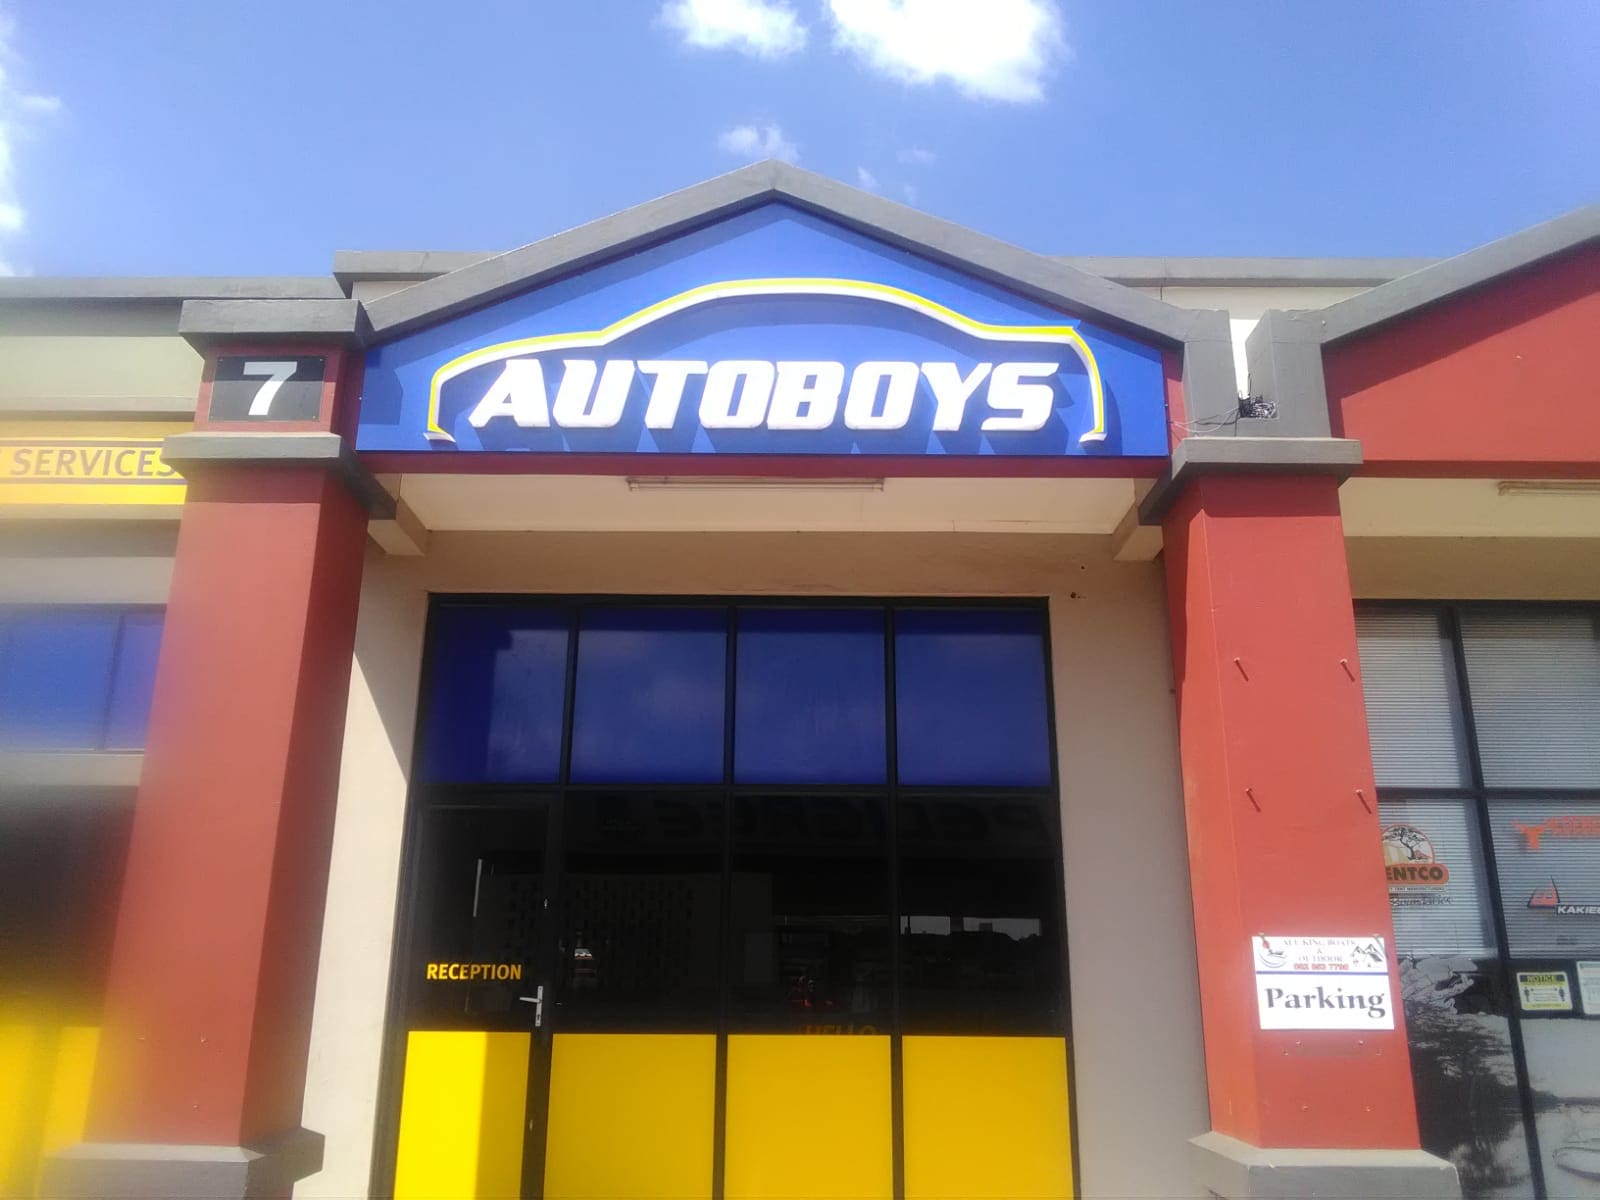 Auto Boys Light Box 2